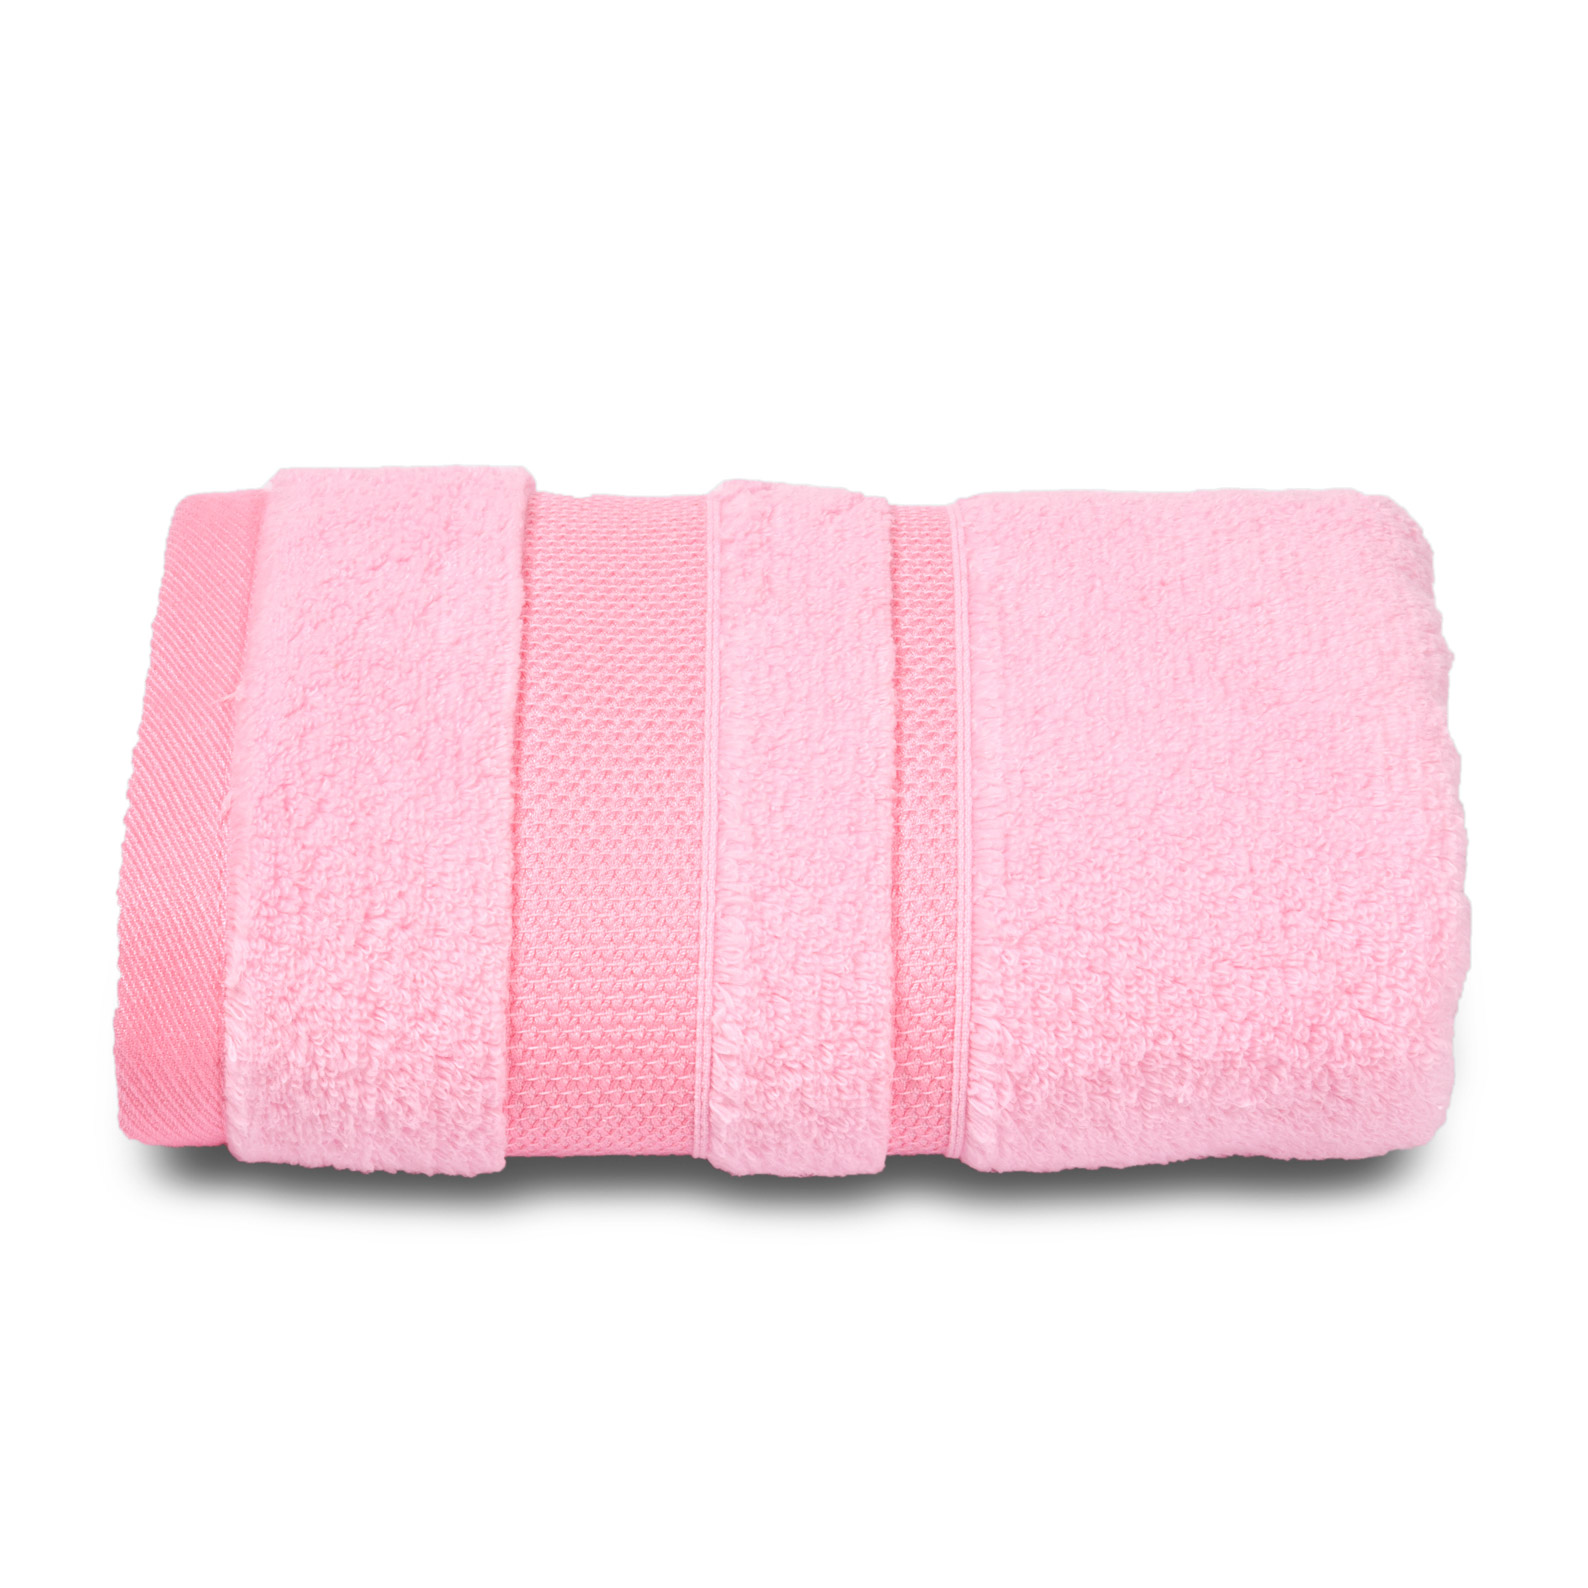 Полотенце махровое Cleanelly perfetto твист 50х100 розовый полотенце утро розовый р 40х70